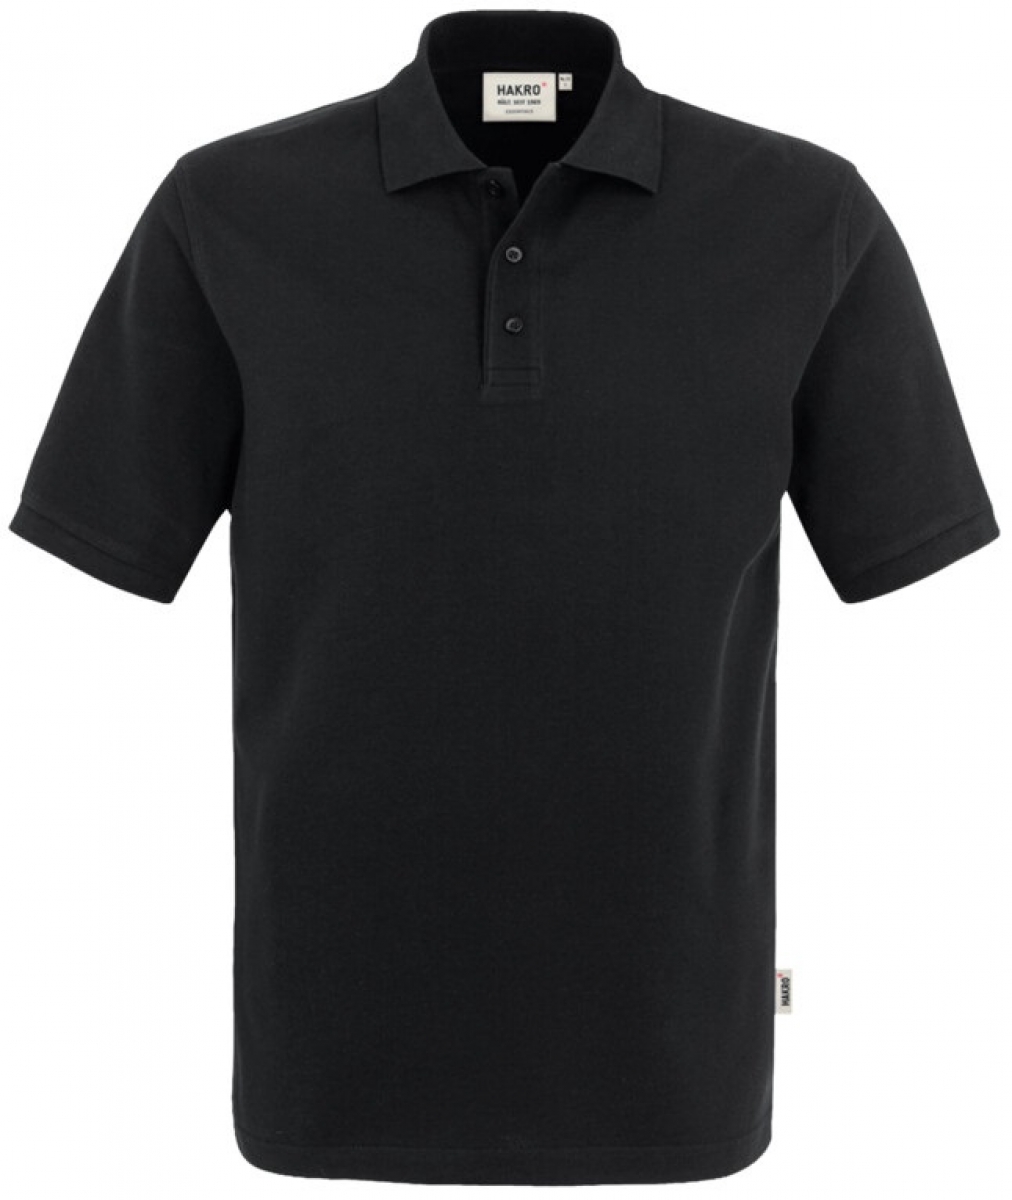 HAKRO-Worker-Shirts, Poloshirt Top, schwarz